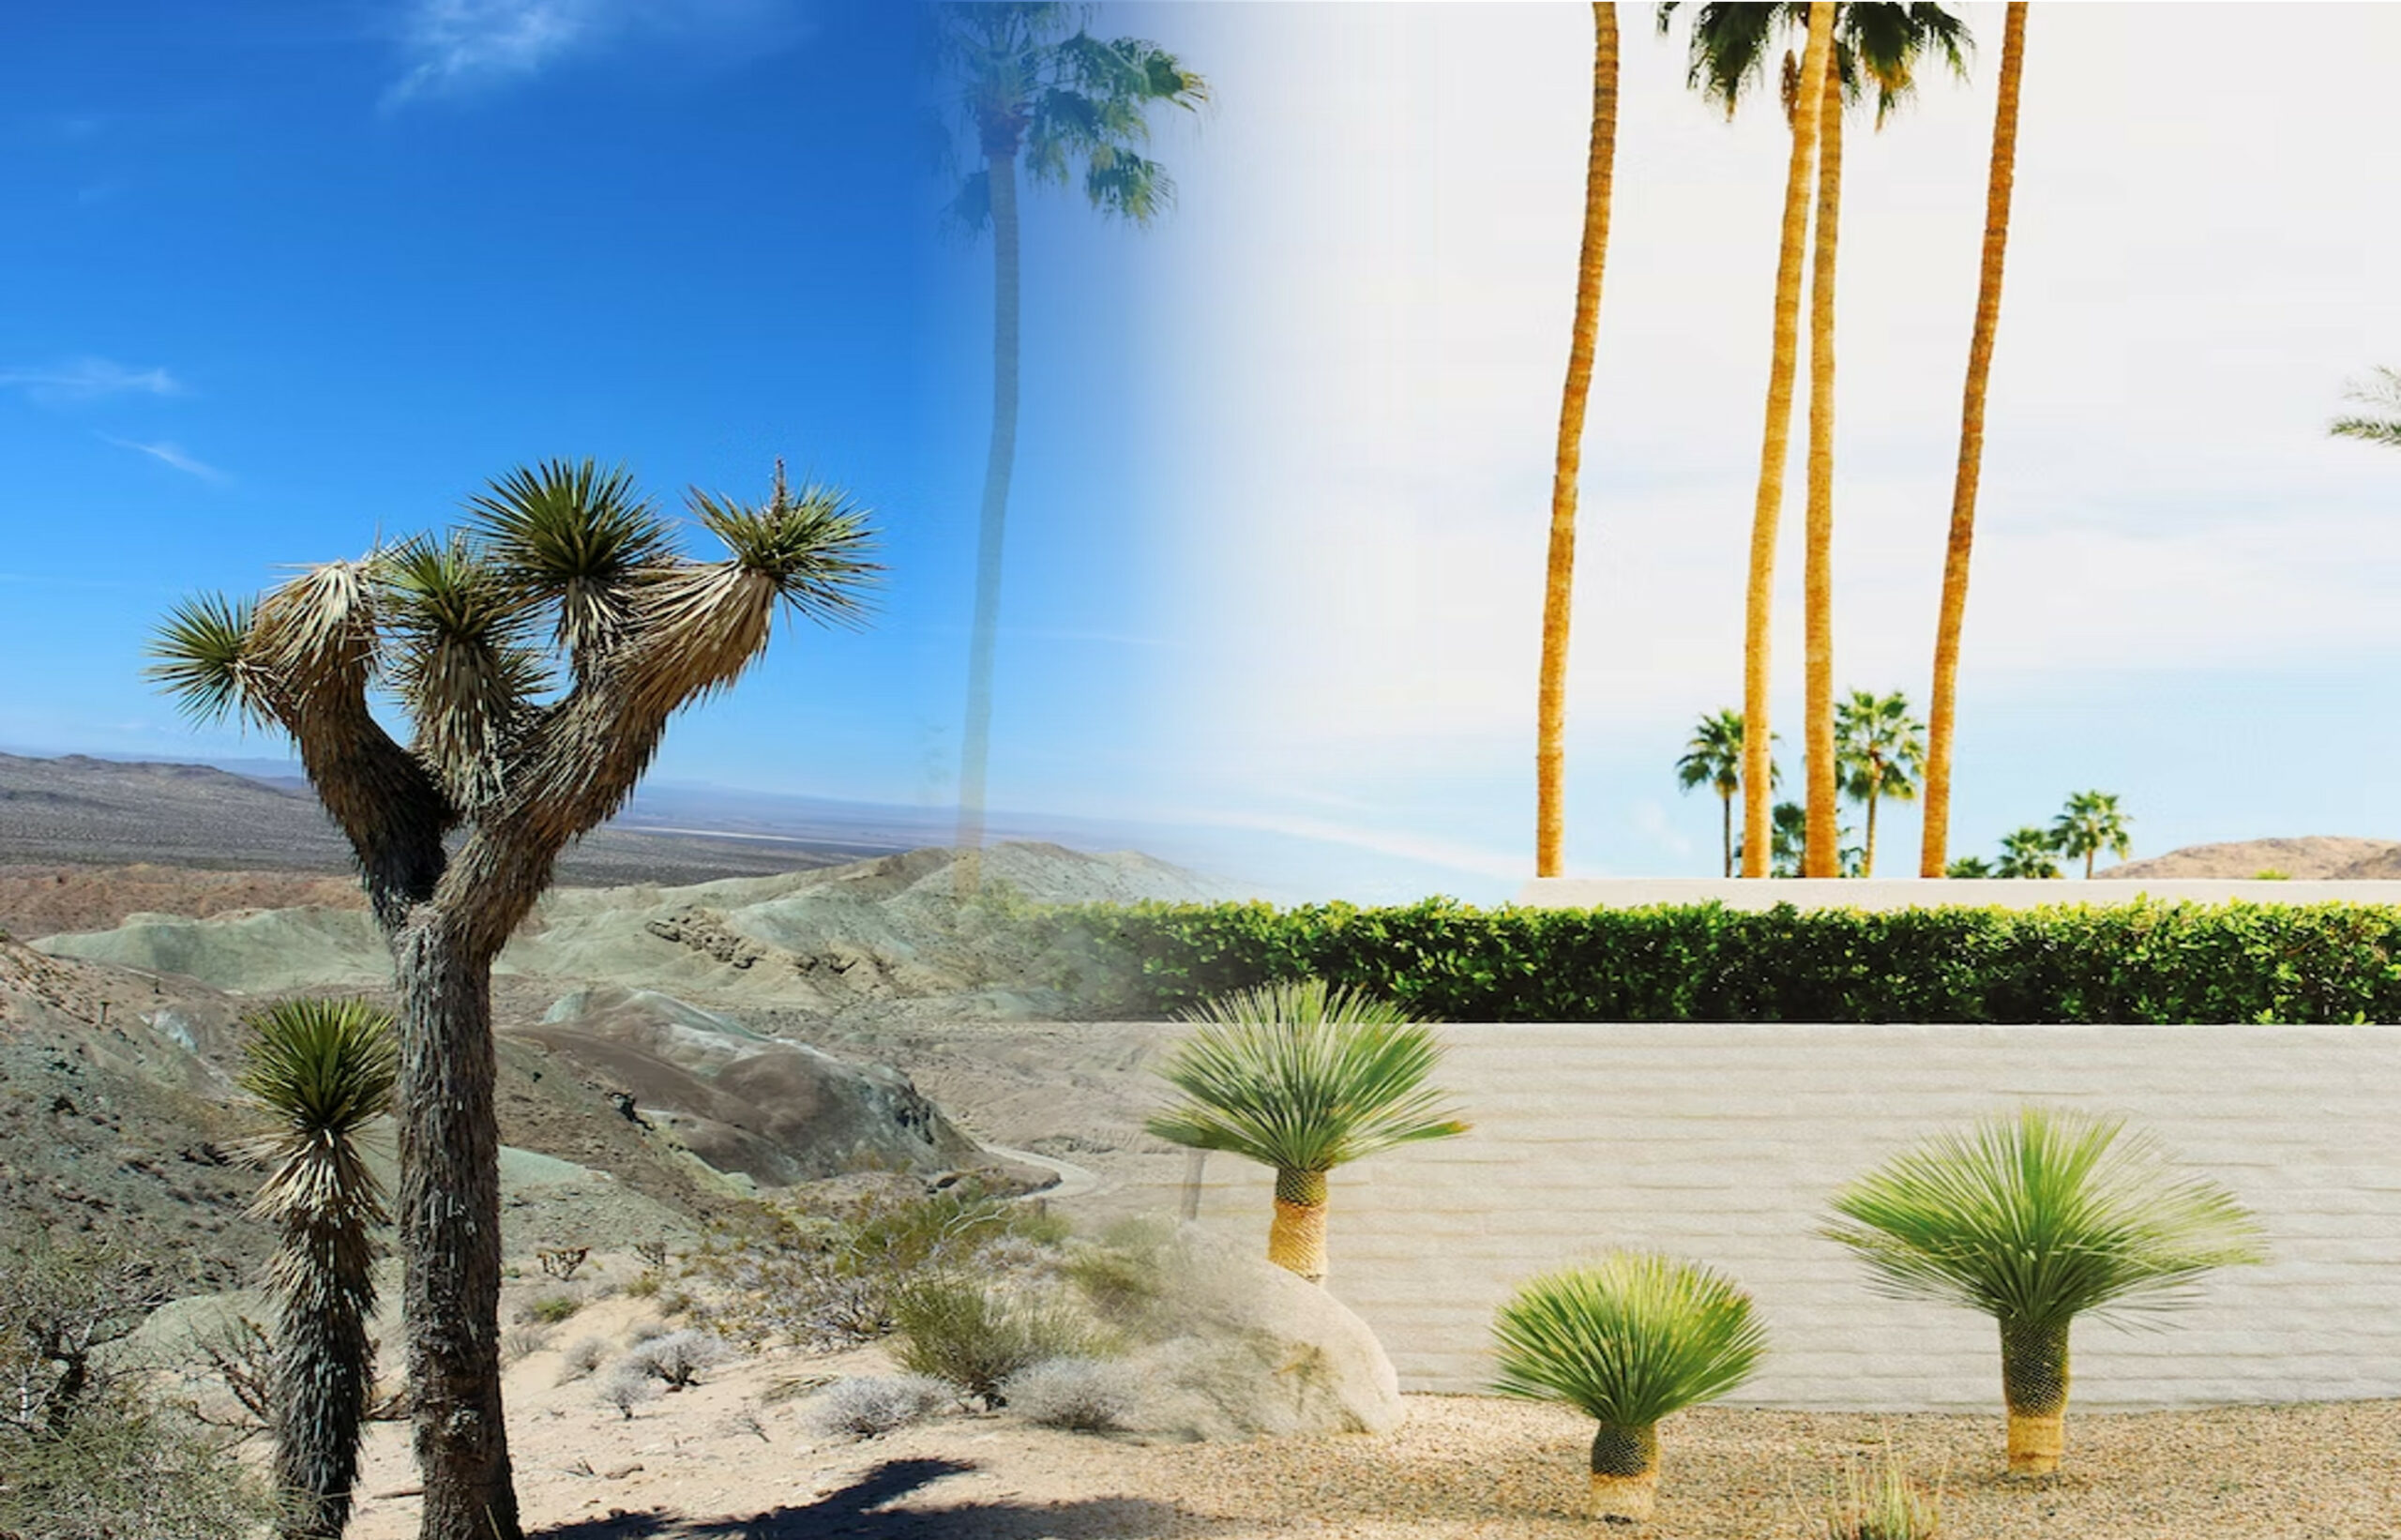 Deserto alto vs Deserto basso California